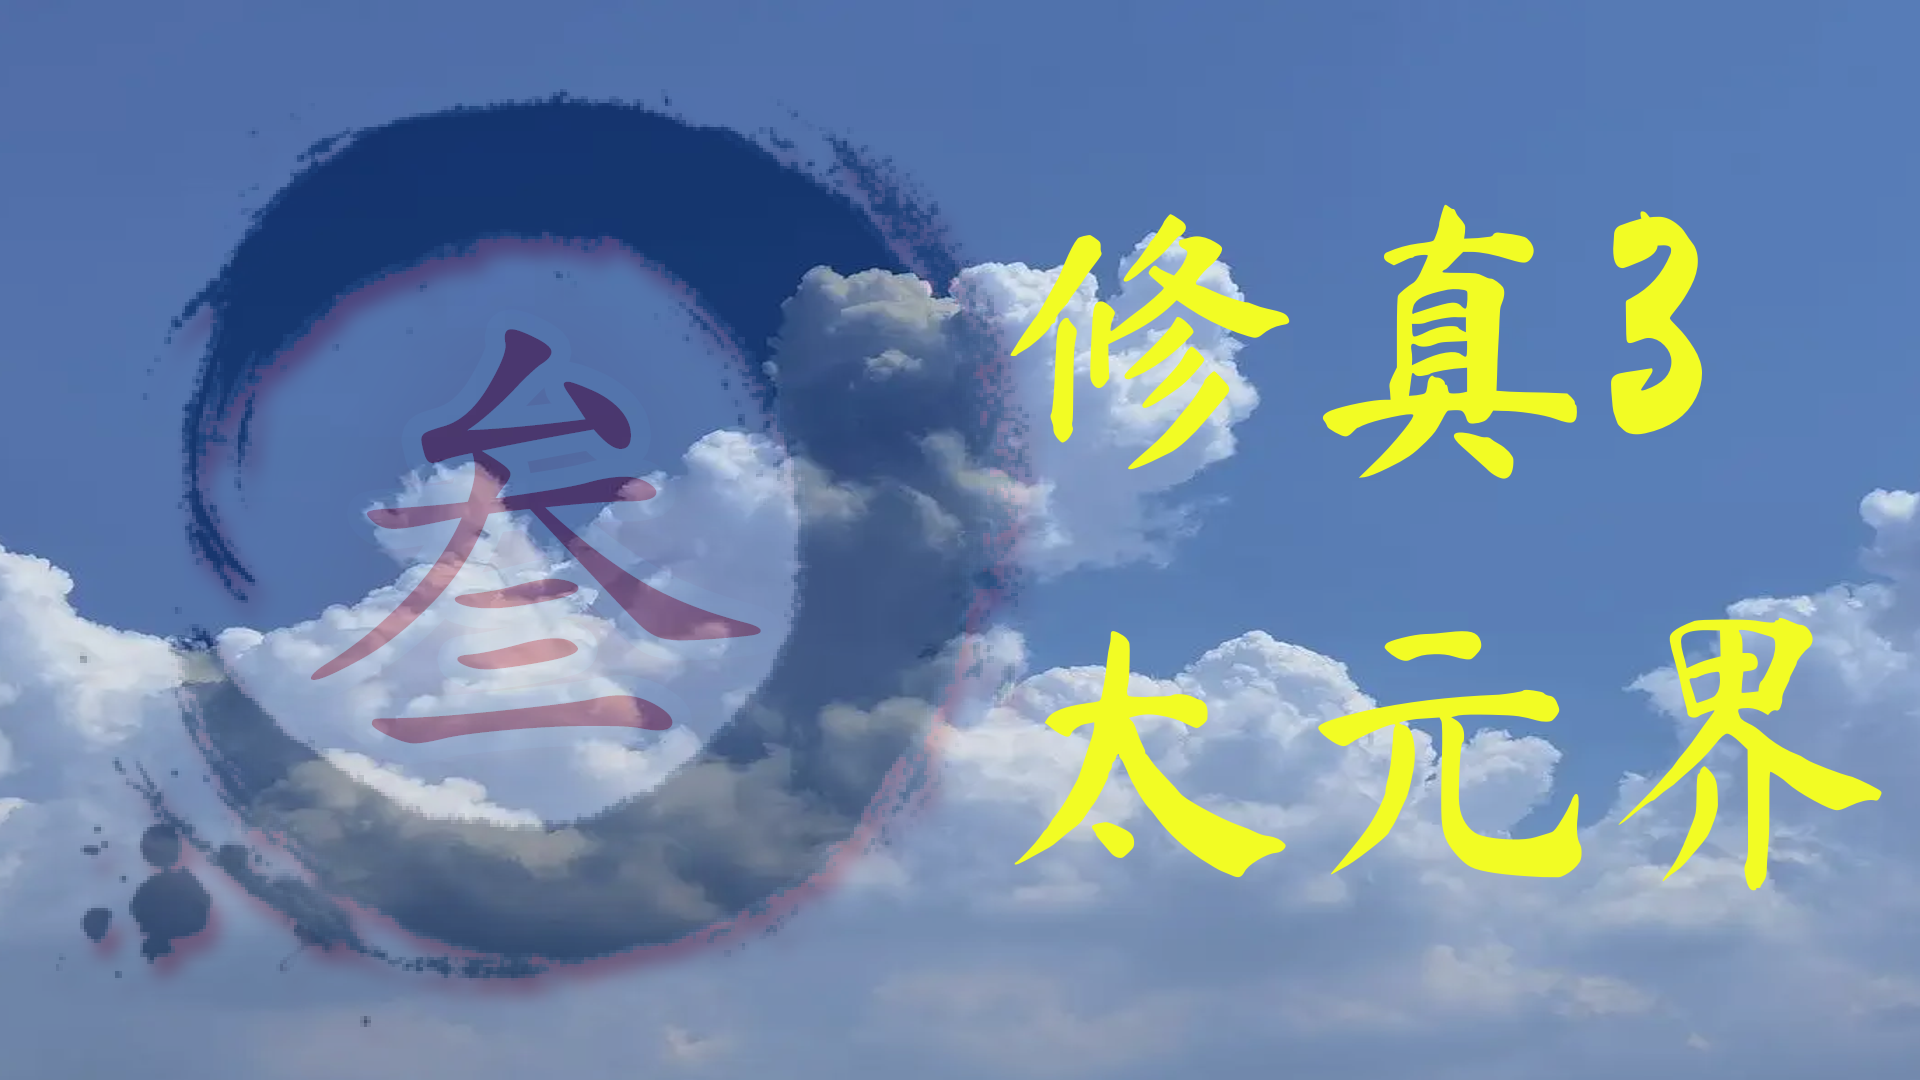 Banner of ការដាំដុះ 3 អាណាចក្រ Taiyuan 1.68